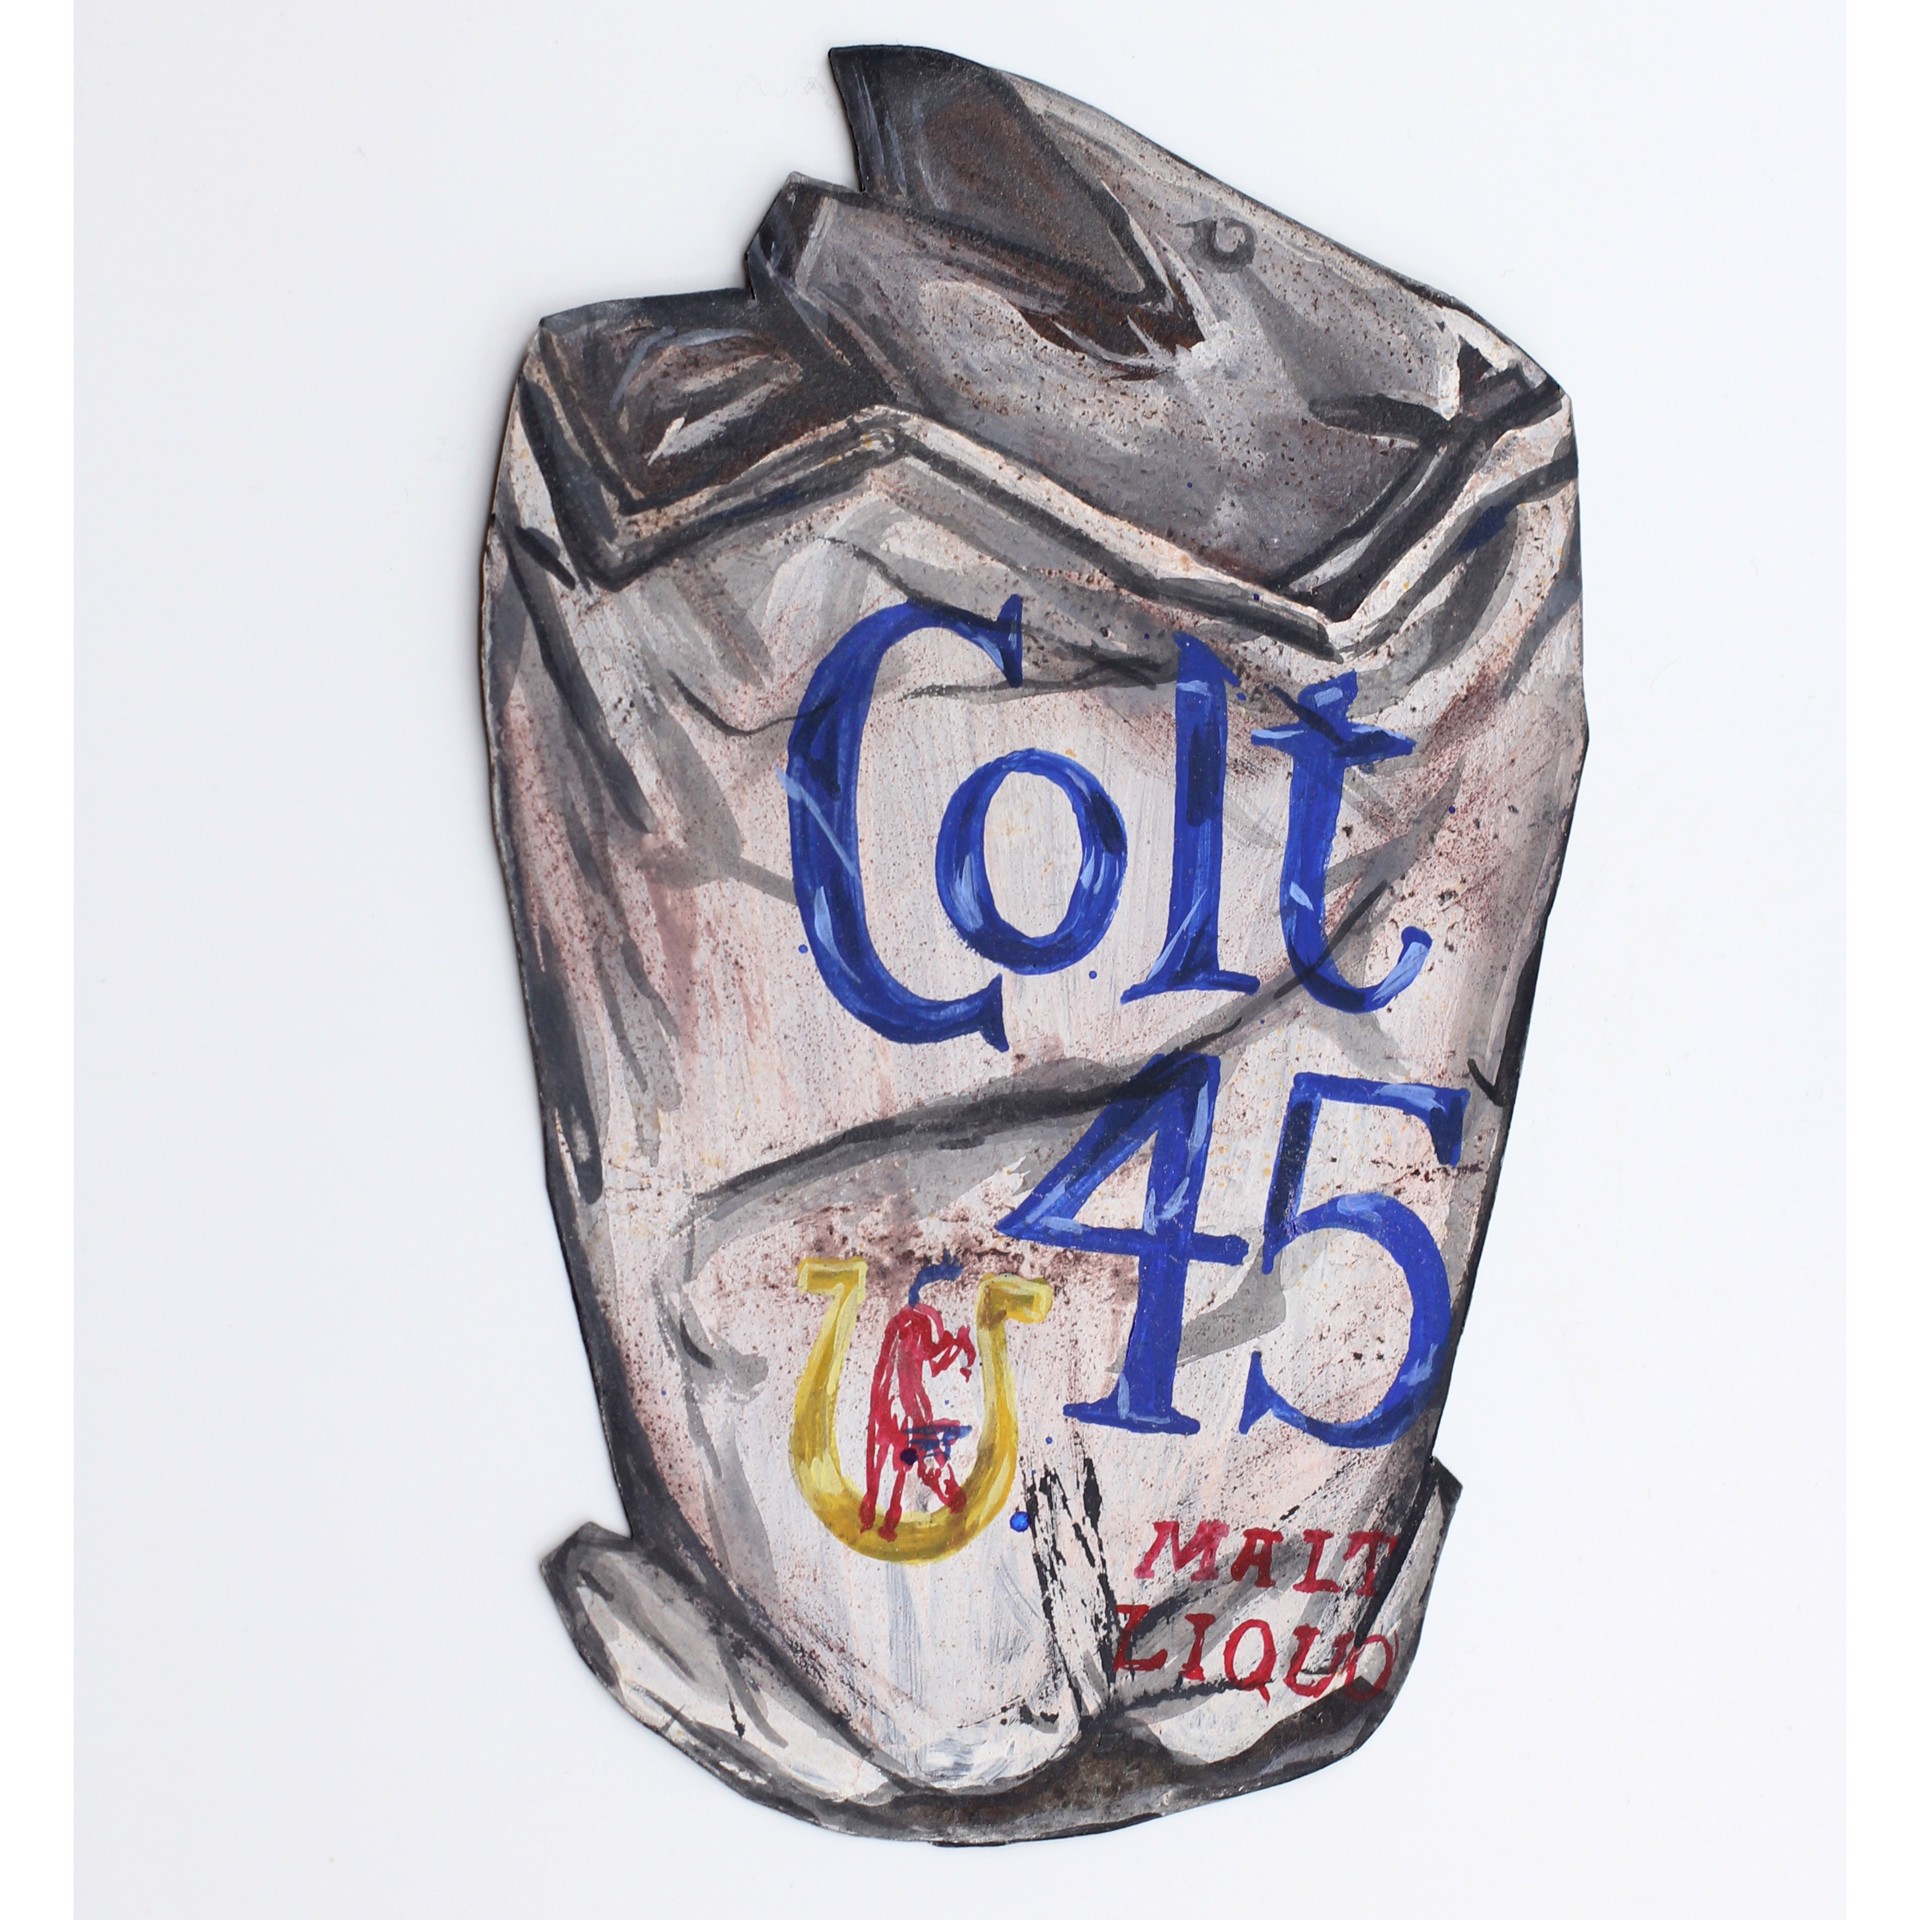 Colt 45 by Todd Ryan White